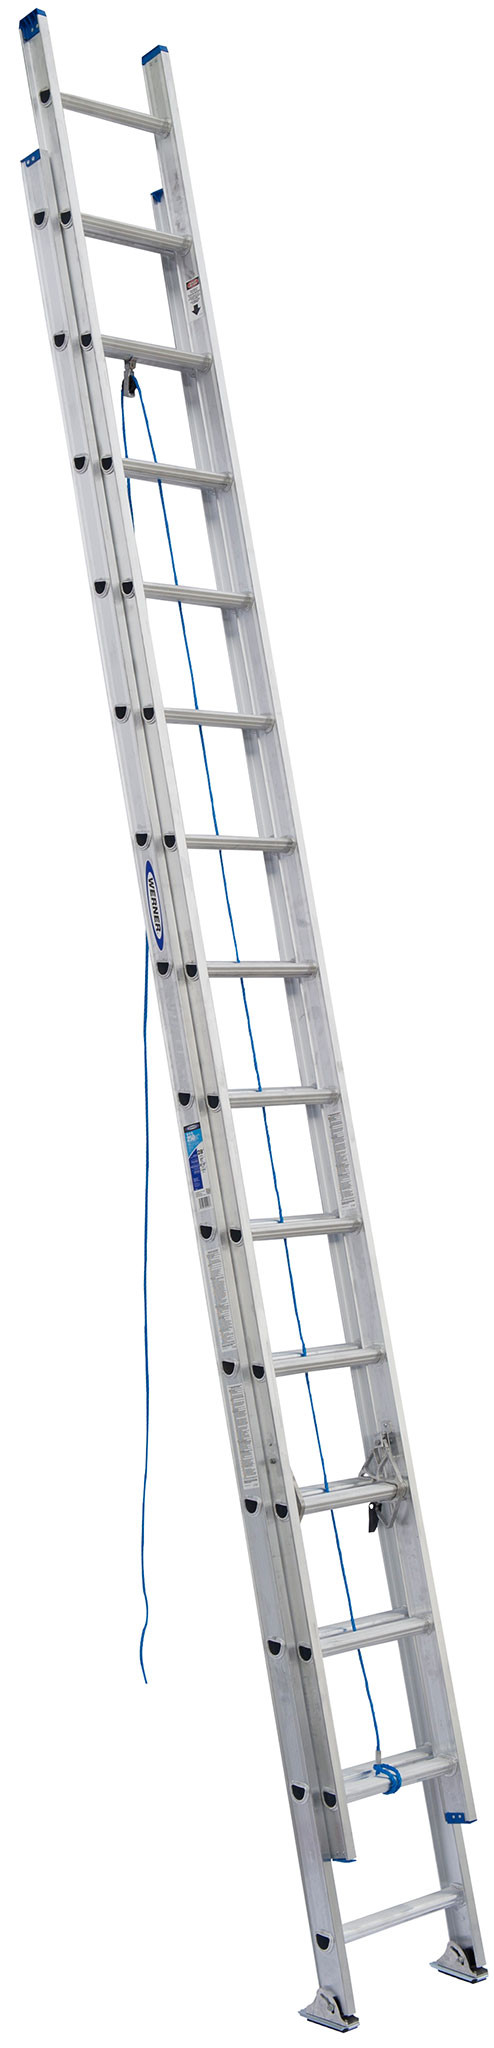 Werner 28-Foot Aluminum Extension Ladder II